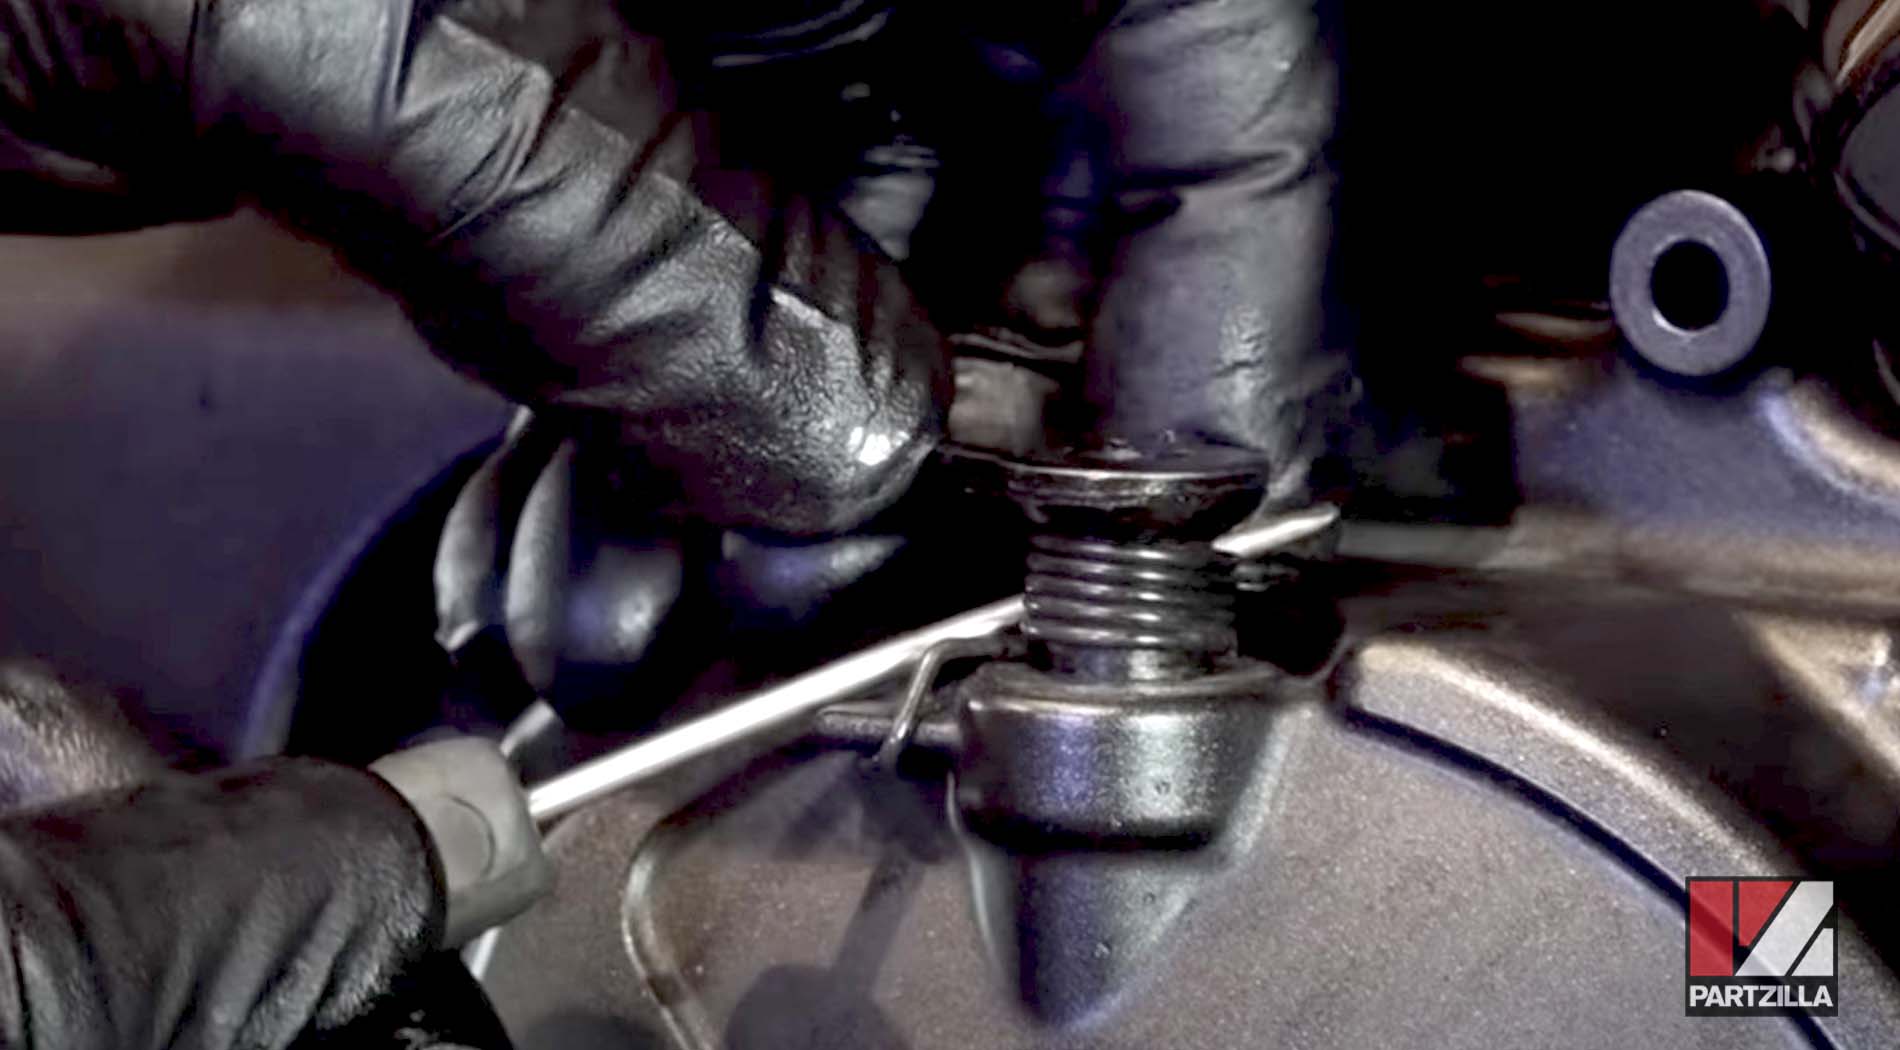 Honda CBR600 clutch rebuild lever check